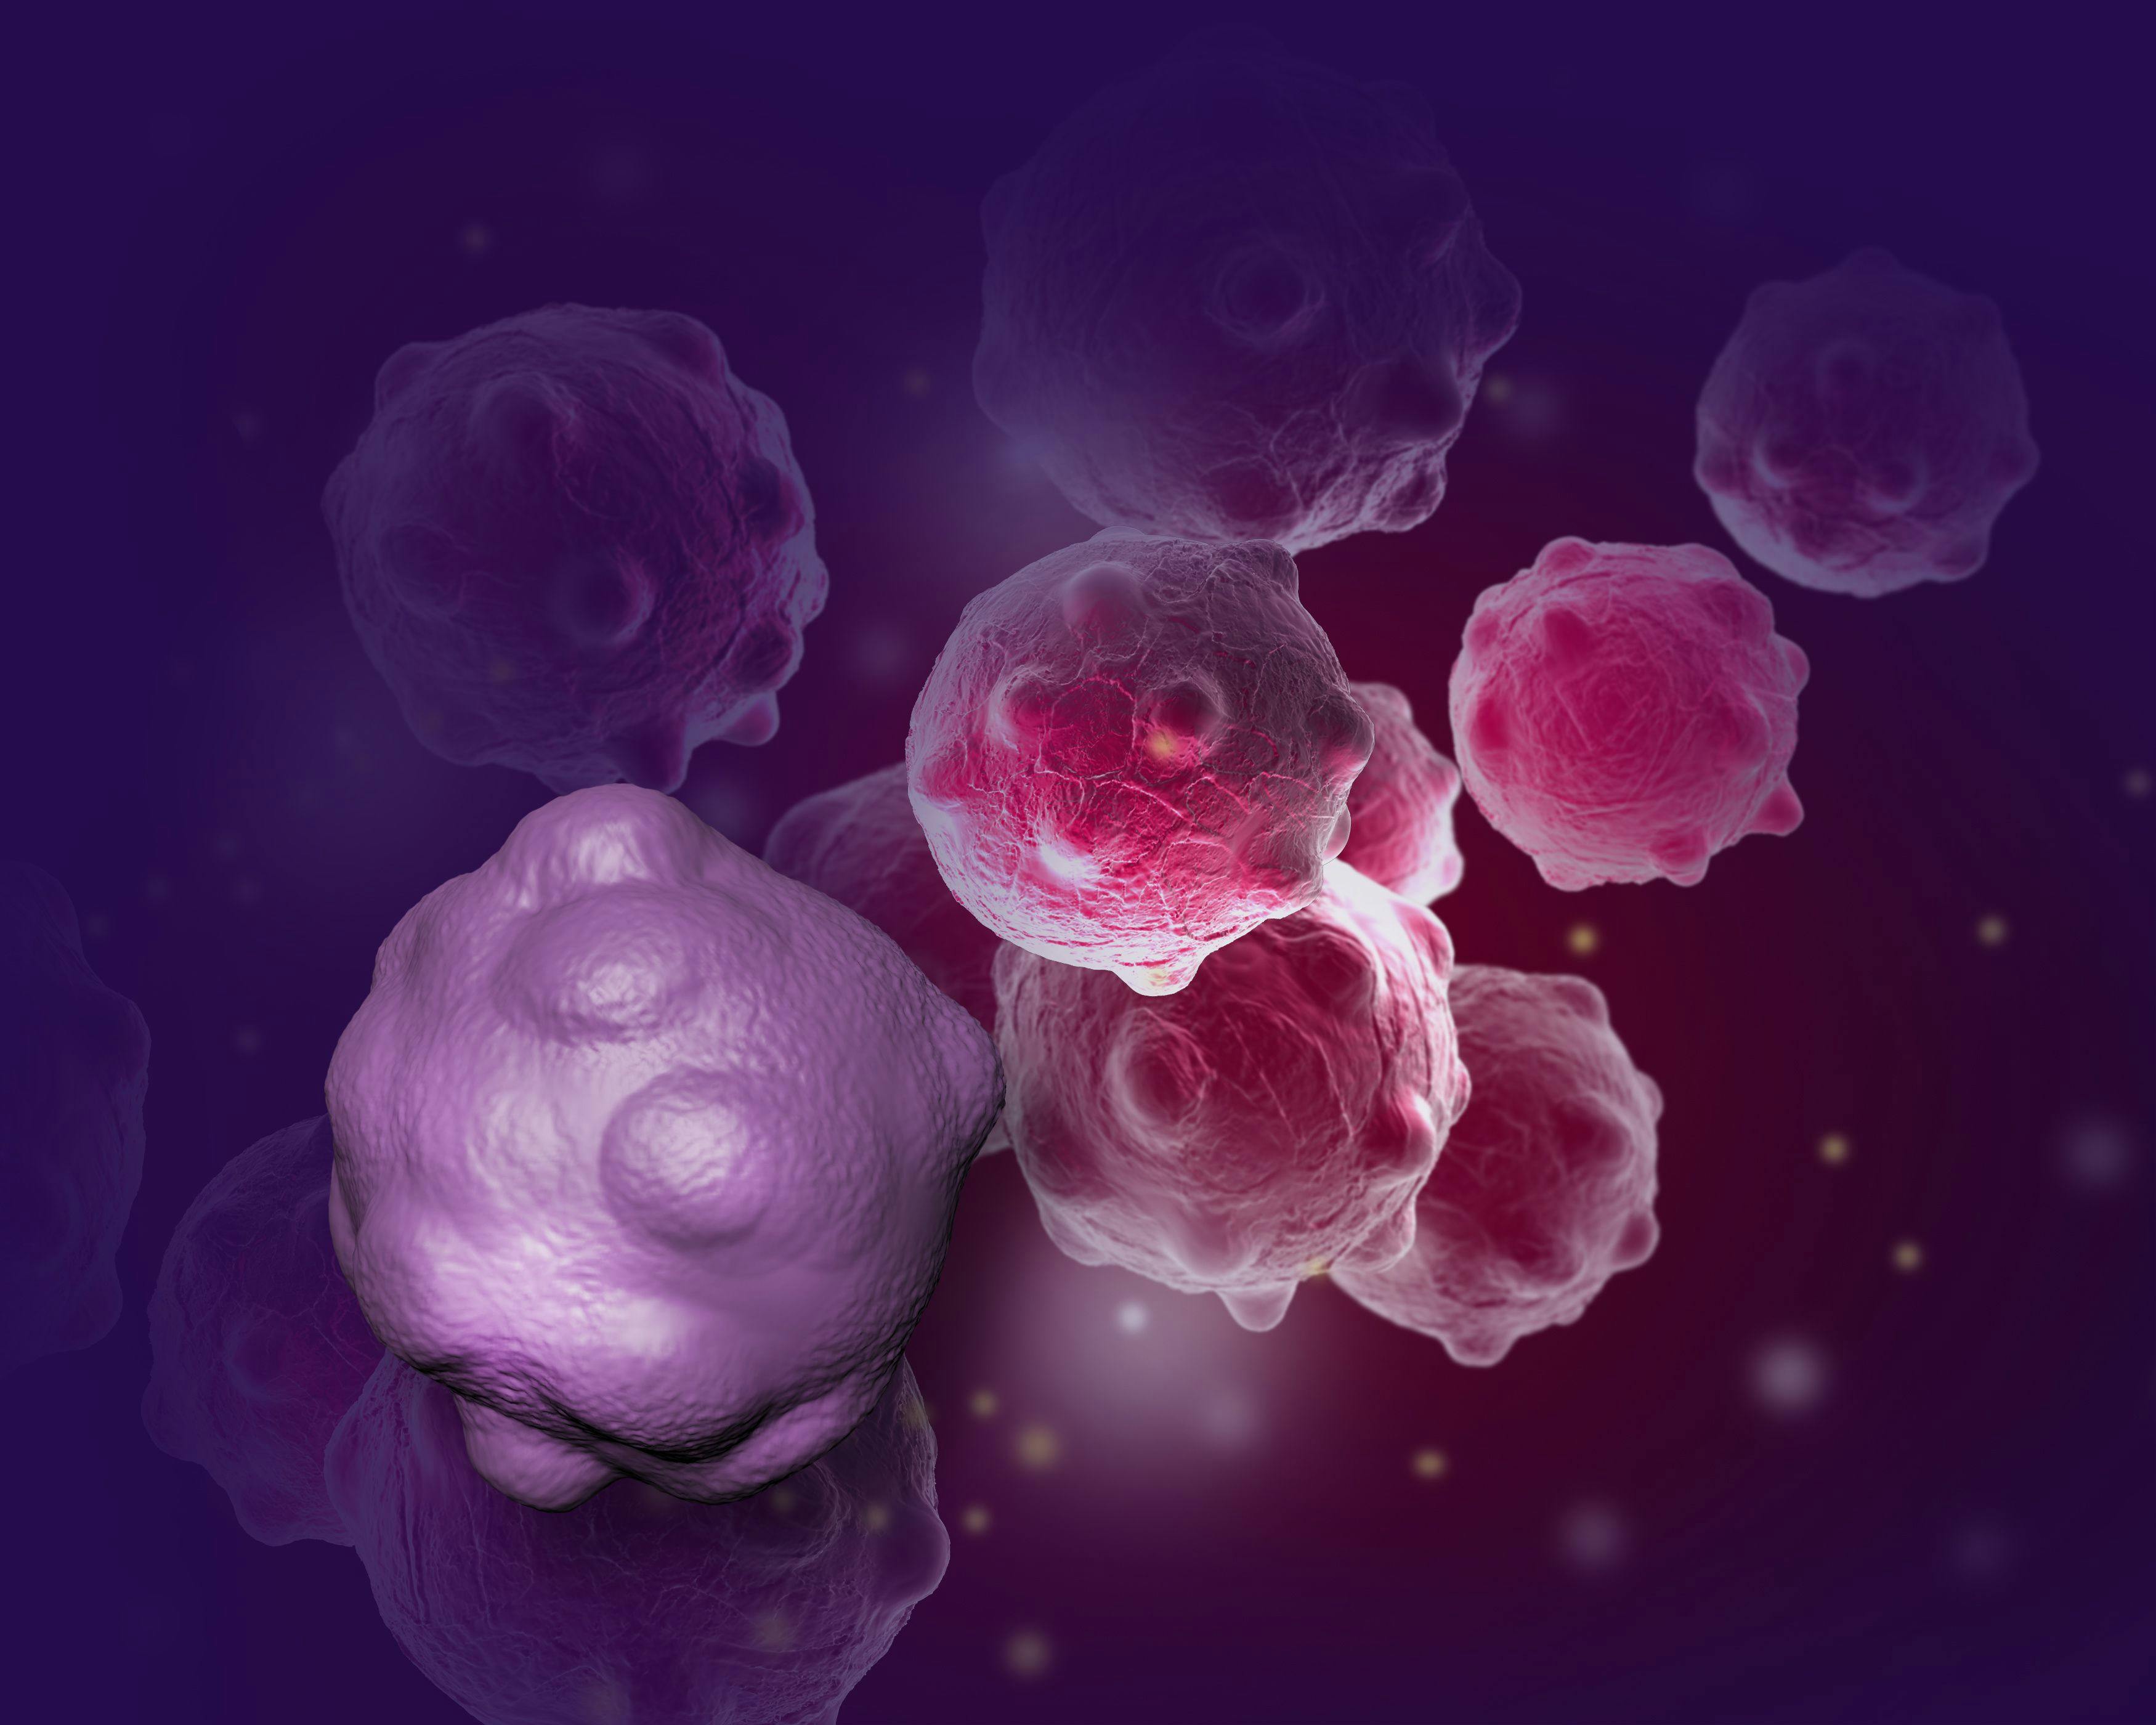 hormone receptor–positive, HER2-negative advanced breast cancer 